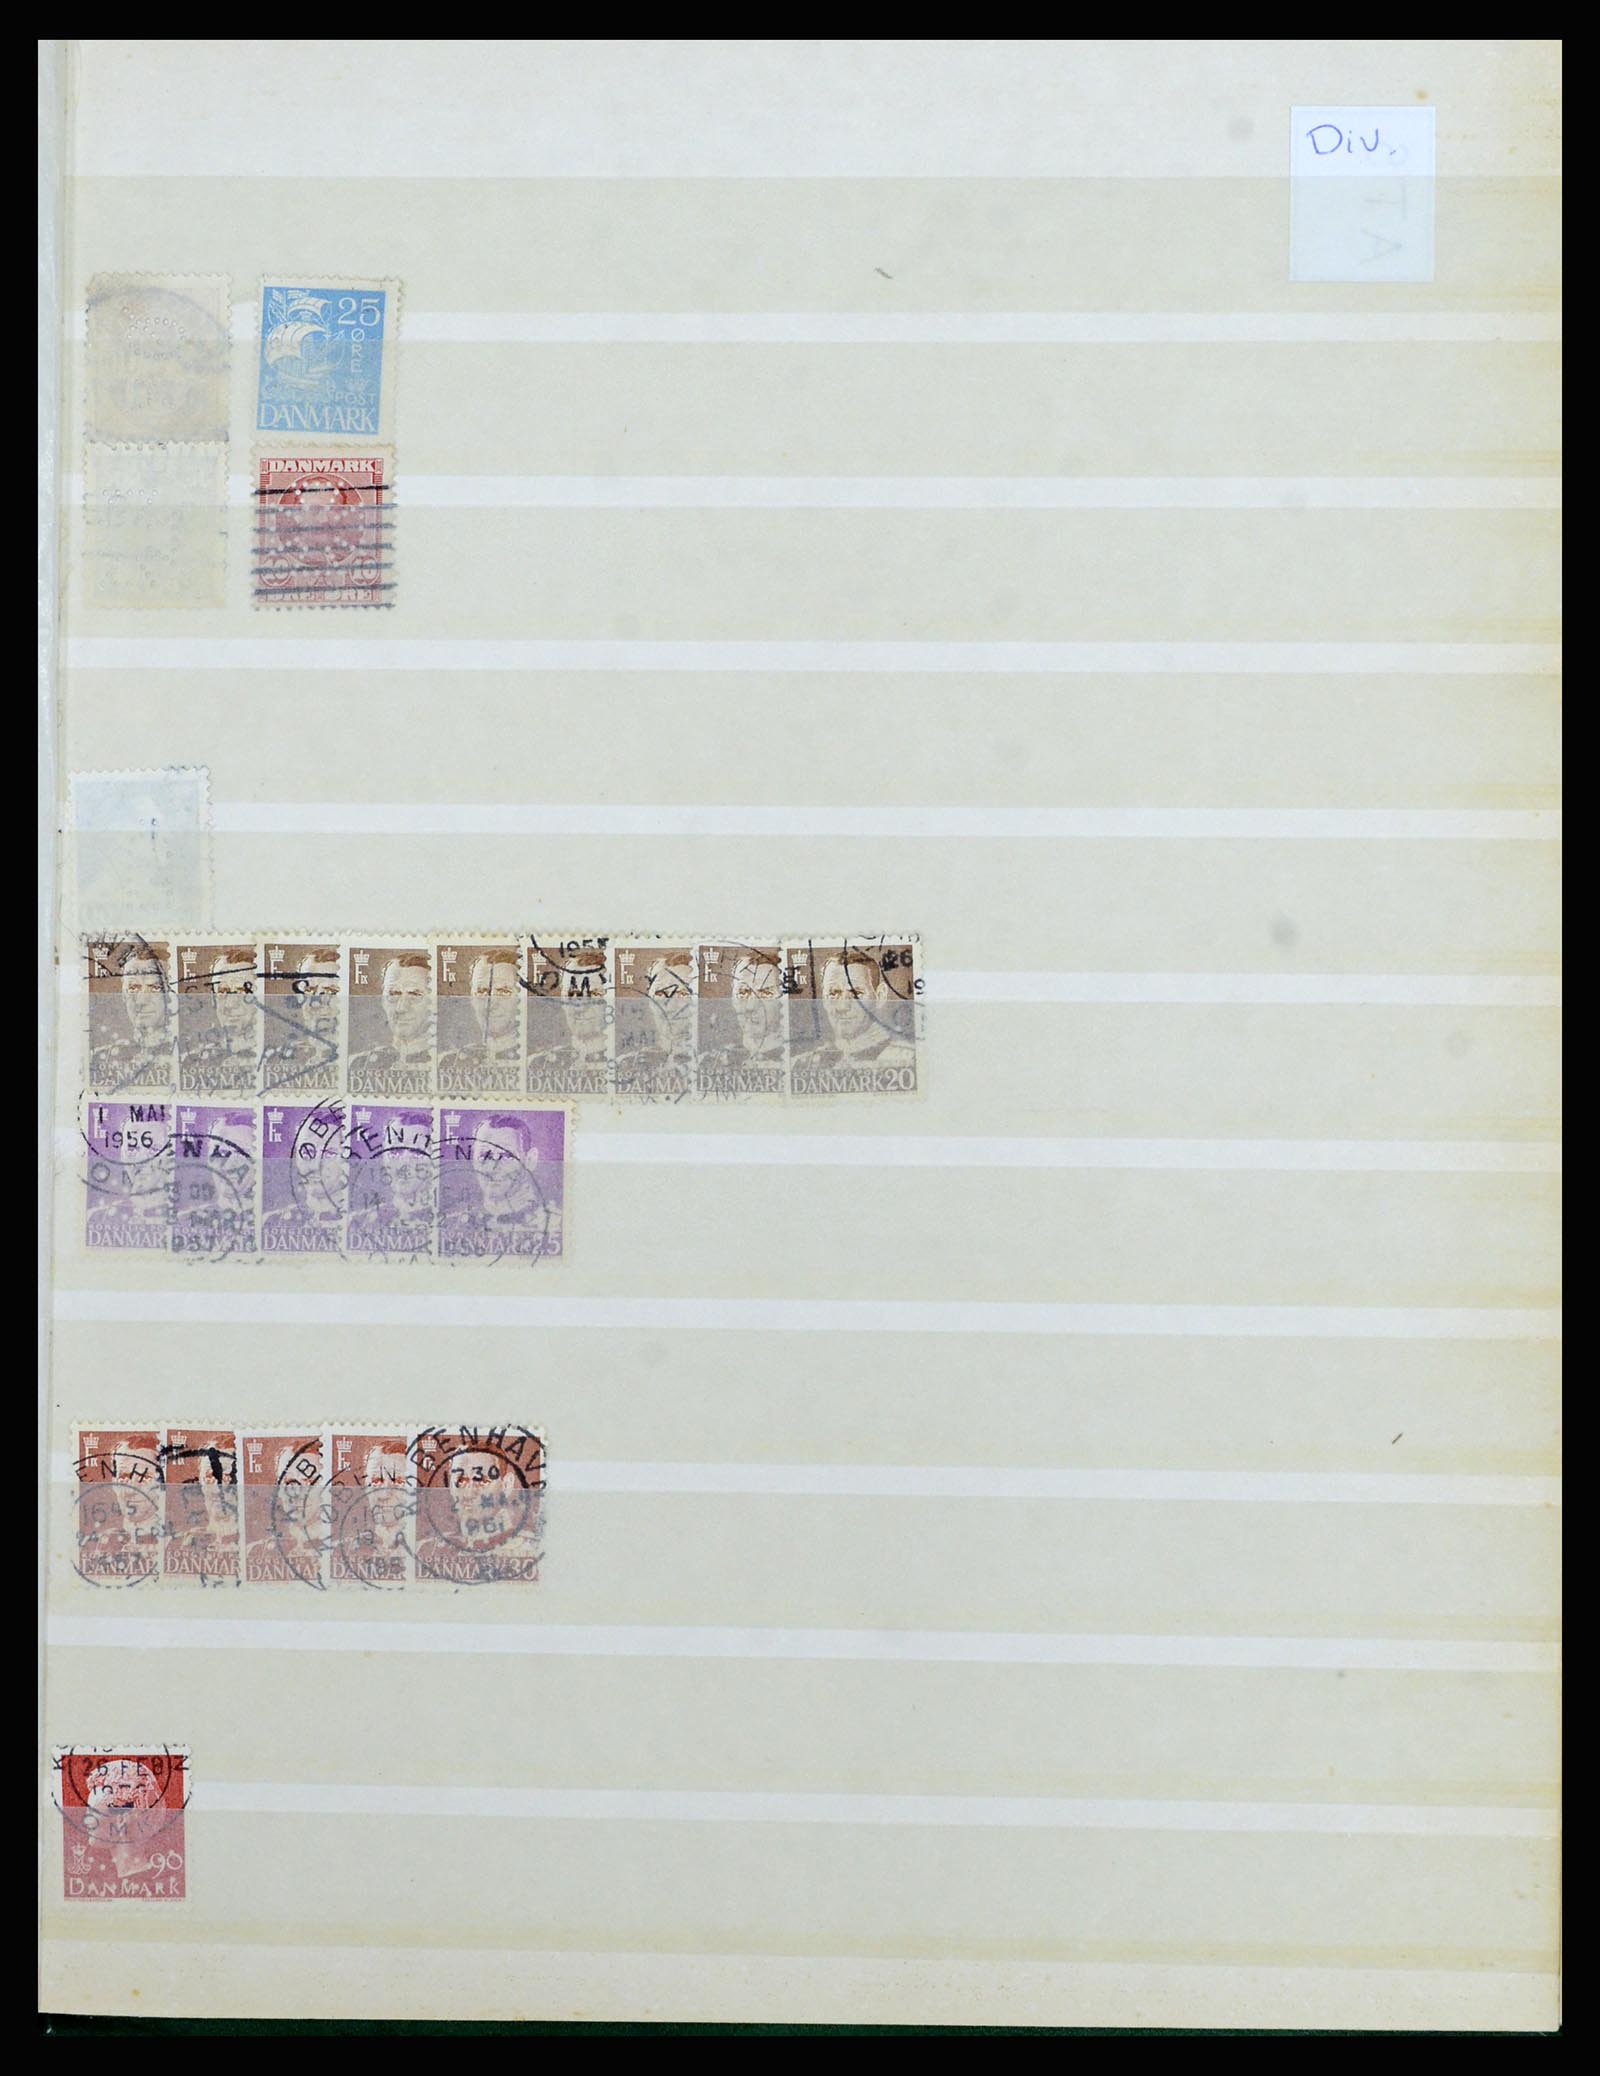 37056 093 - Stamp collection 37056 Denmark perfins.